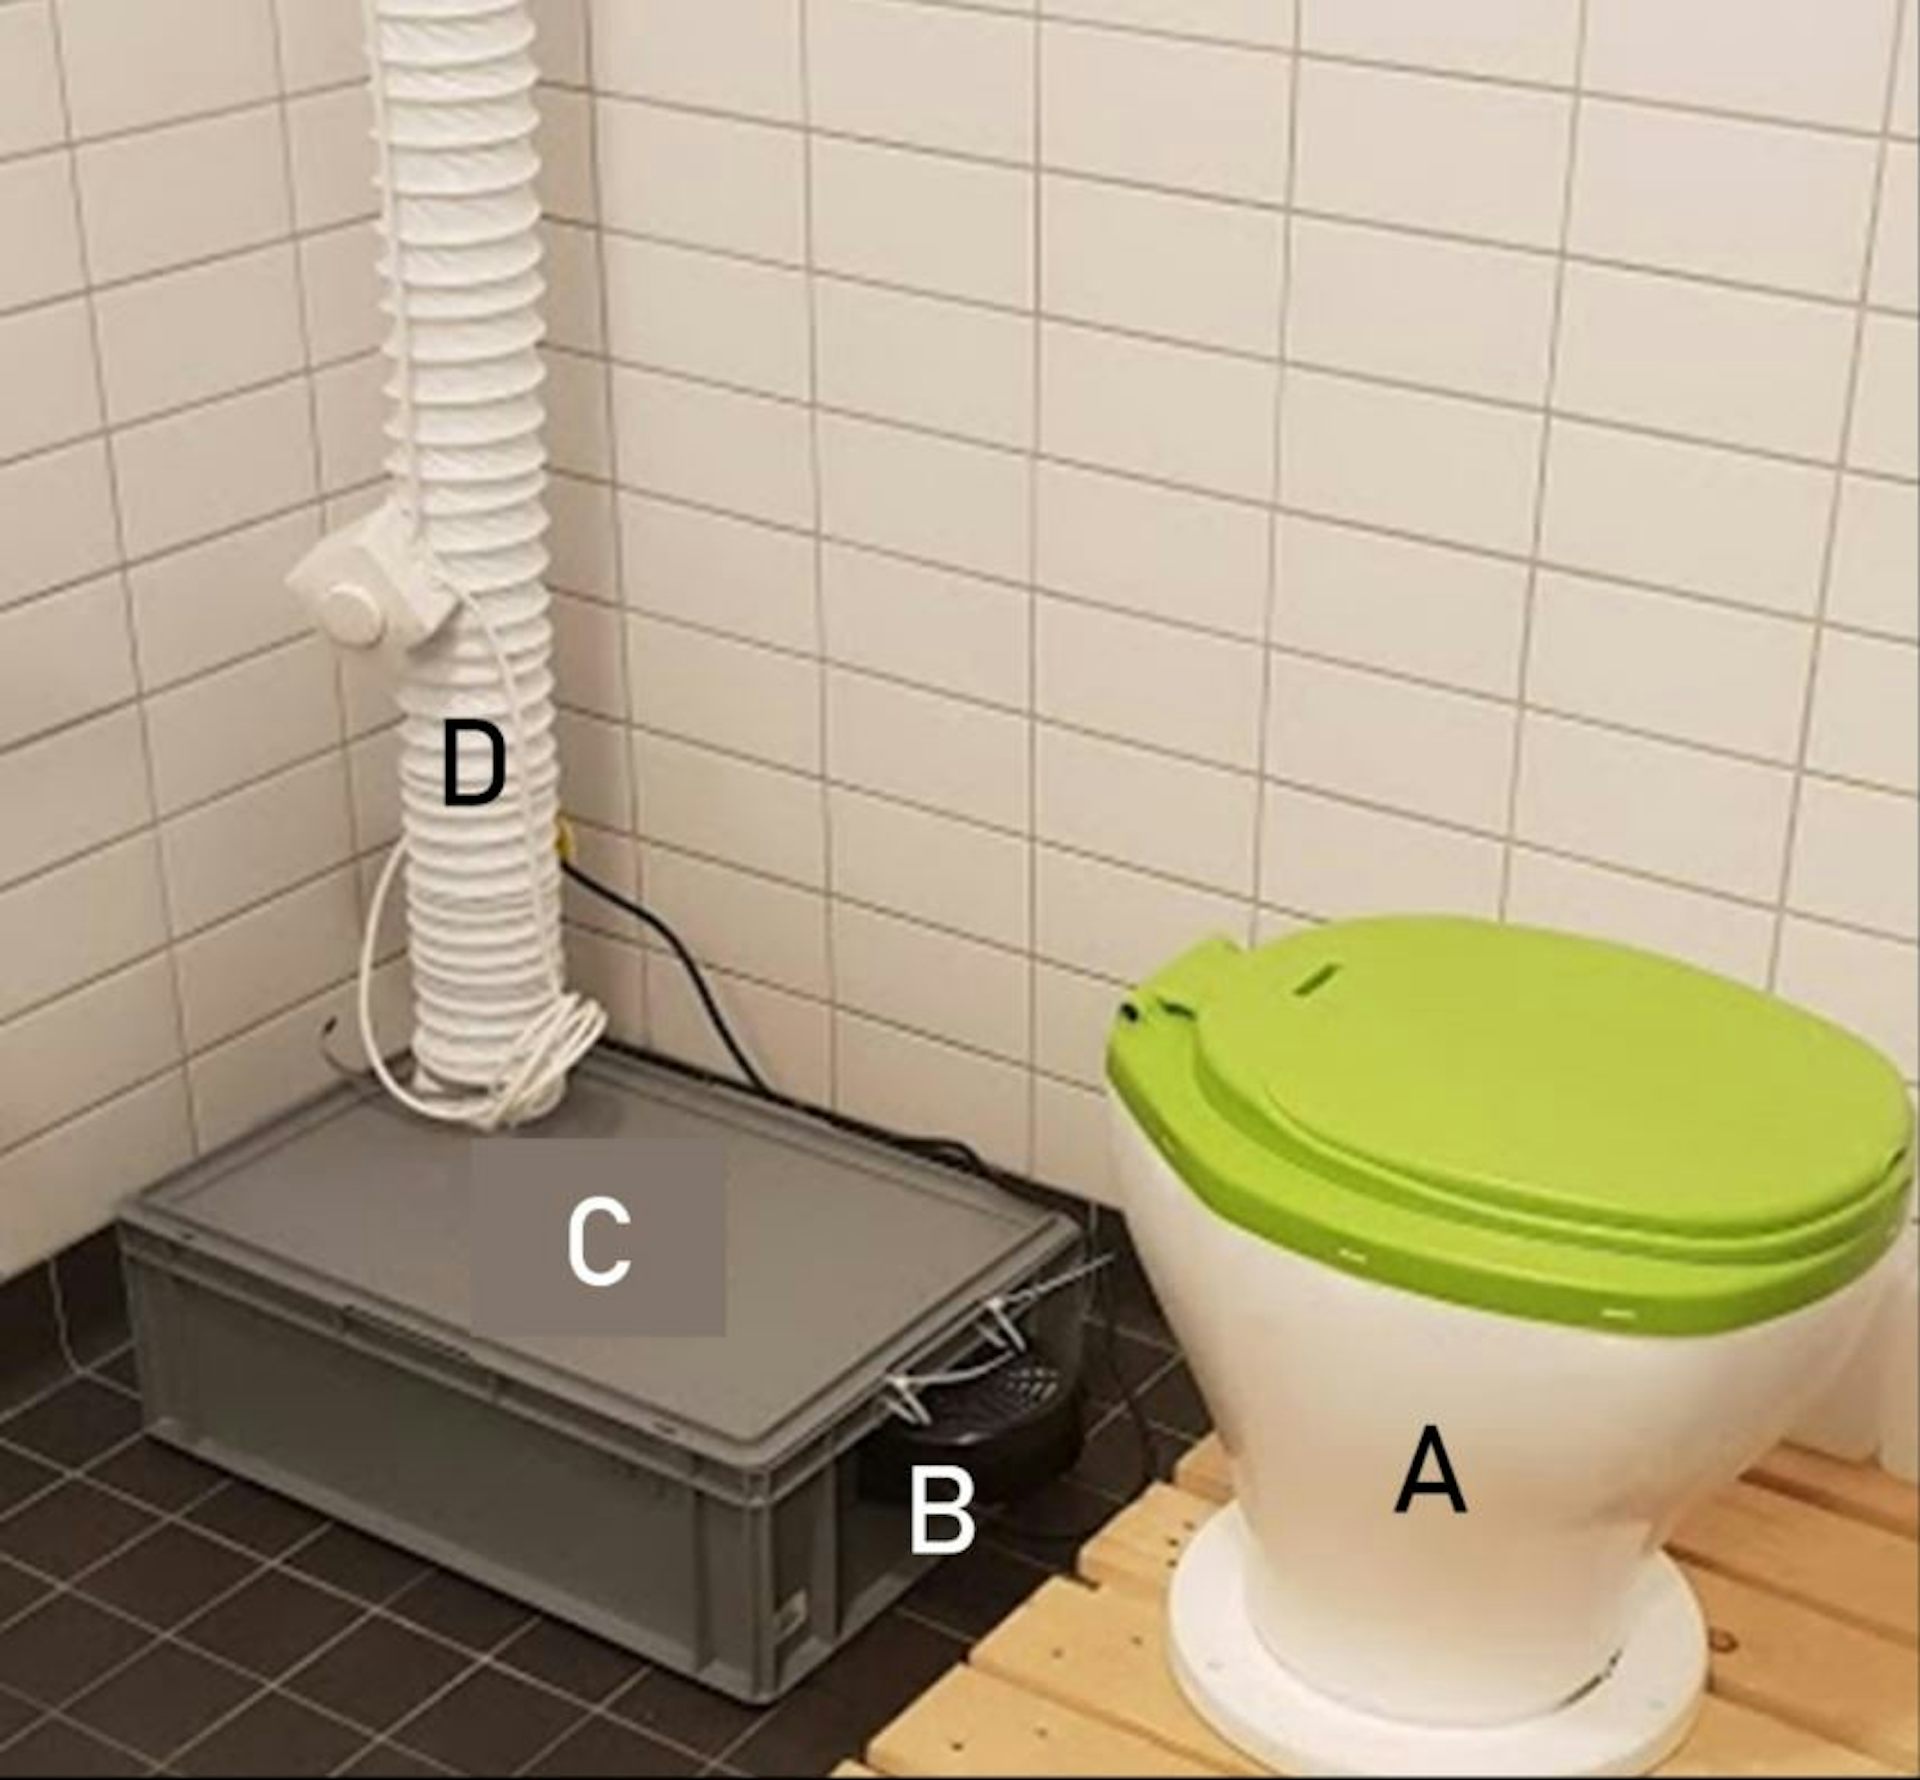  Une toilette sèche qui sépare l'urine.